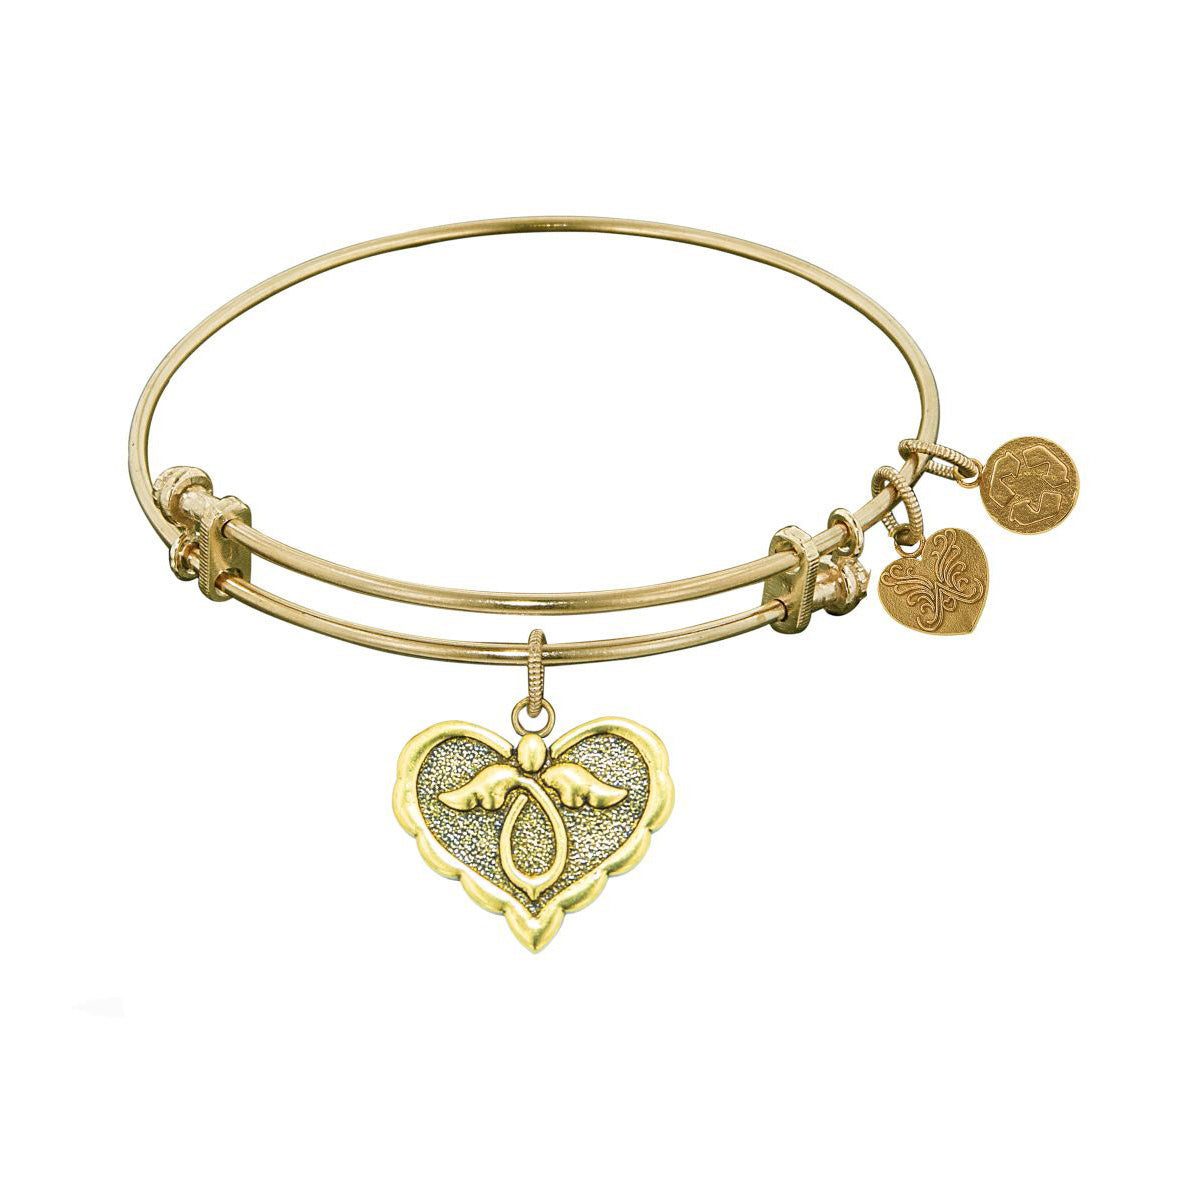 Stipple Finish Brass Angel Angelica Bangle Bracelet, 7.25" fine designer jewelry for men and women